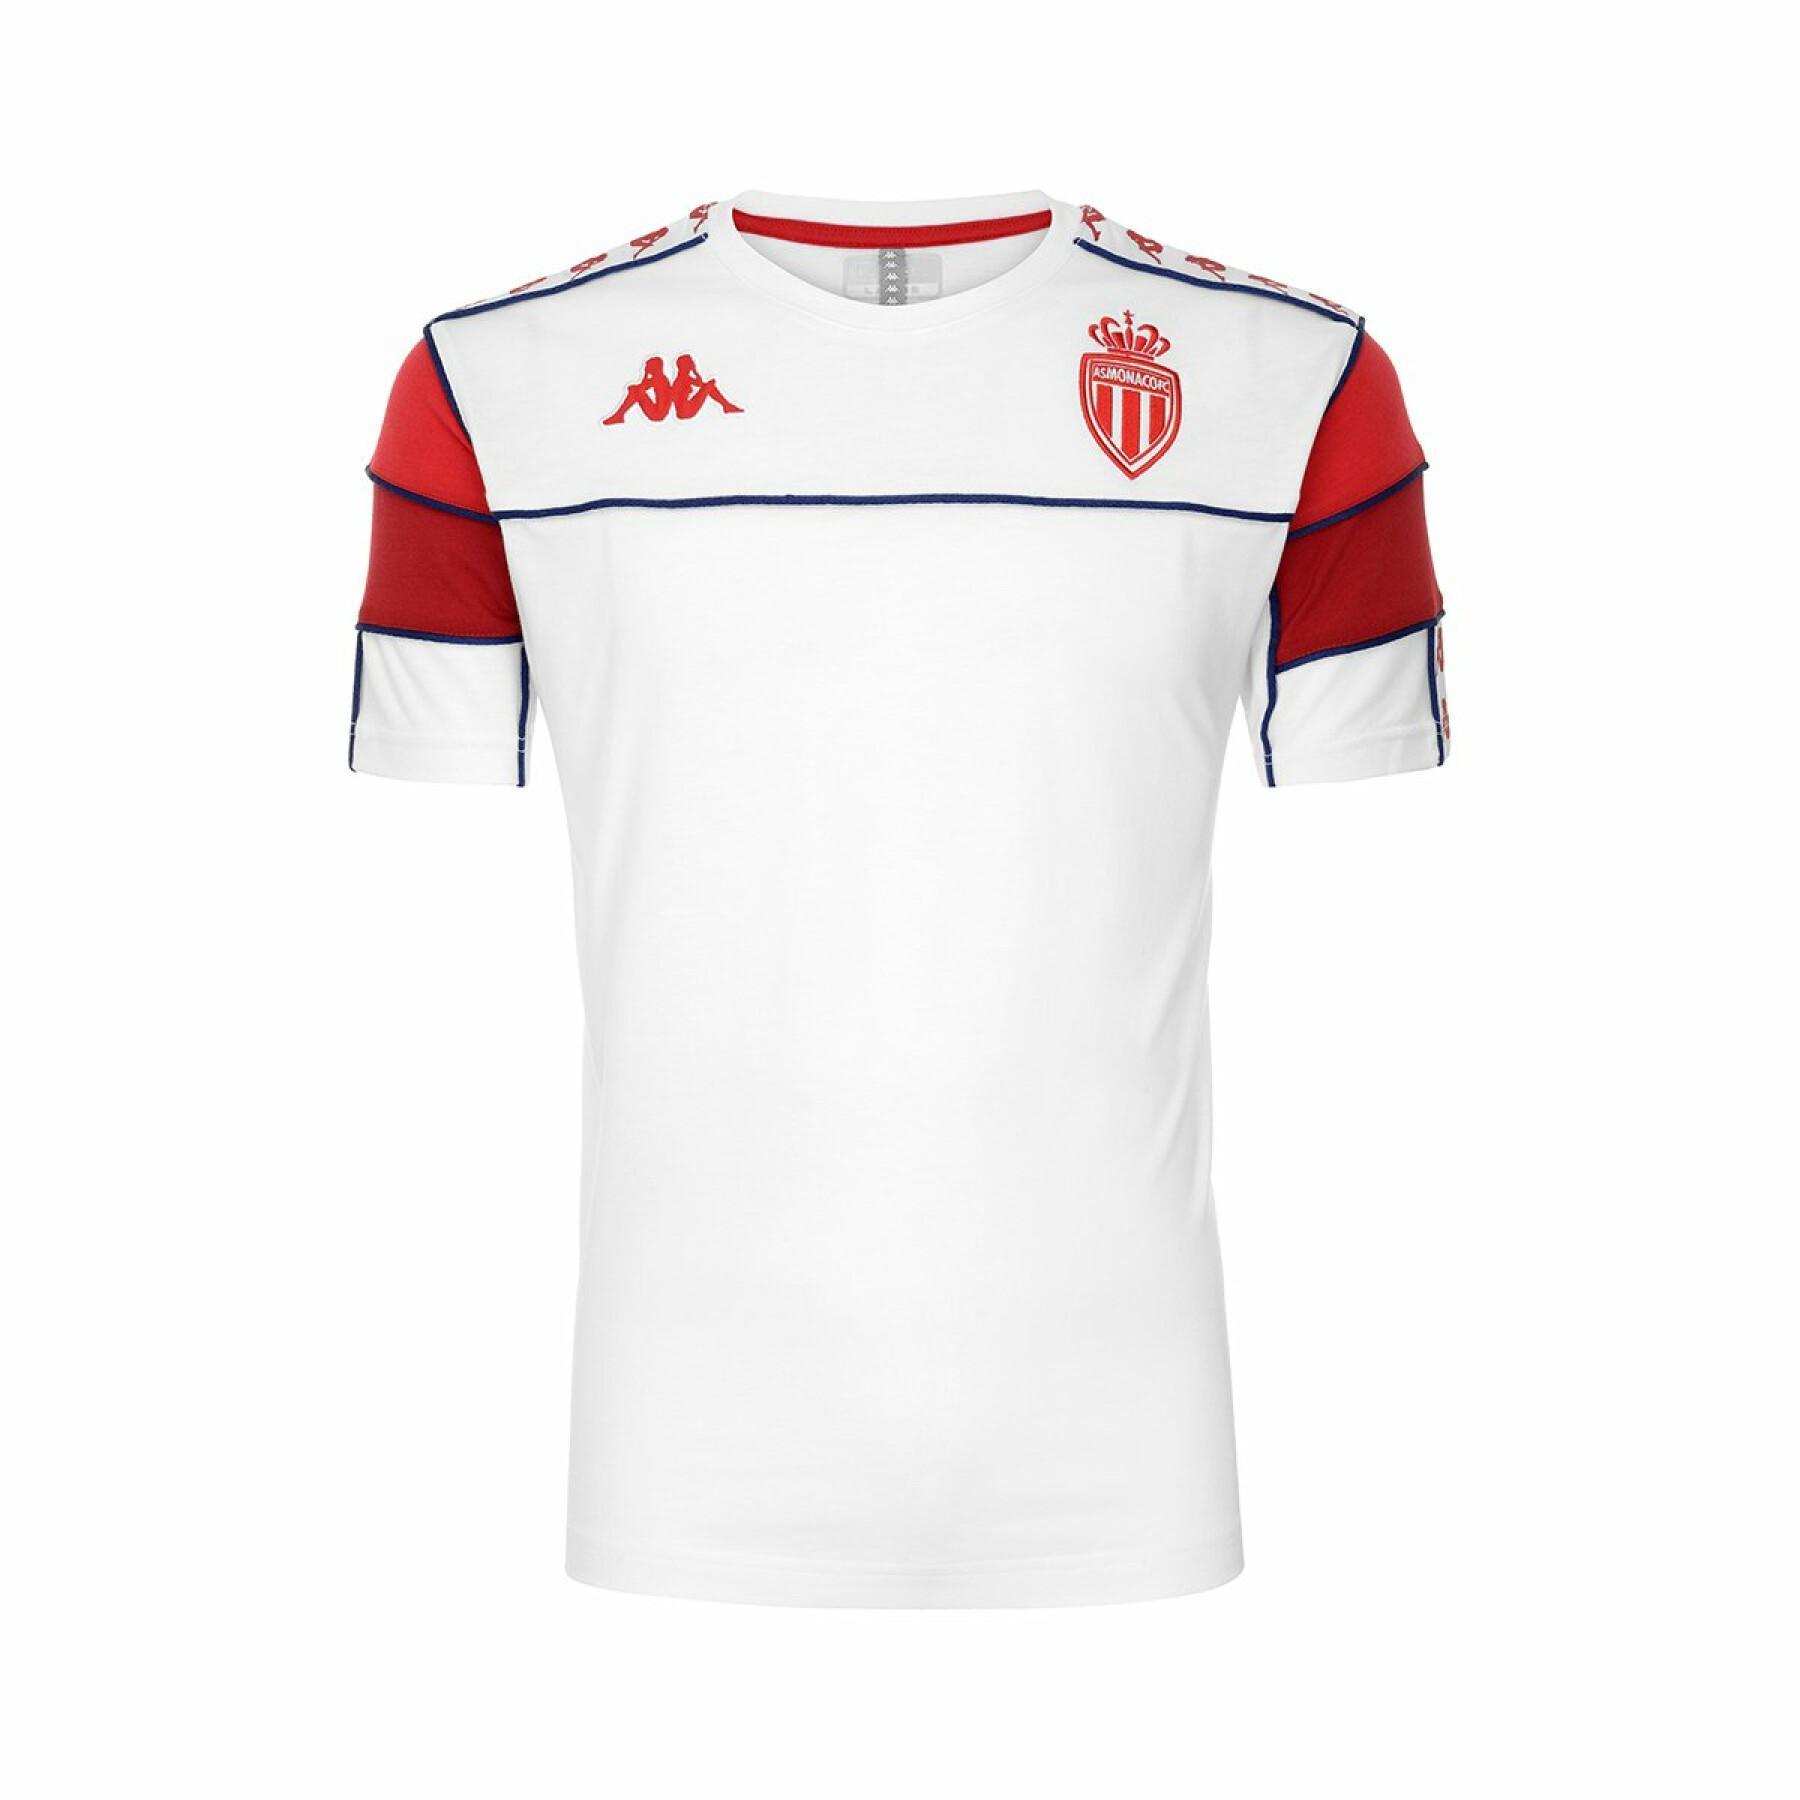 Camiseta niños AS Monaco 2021/22 222 banda arari slim